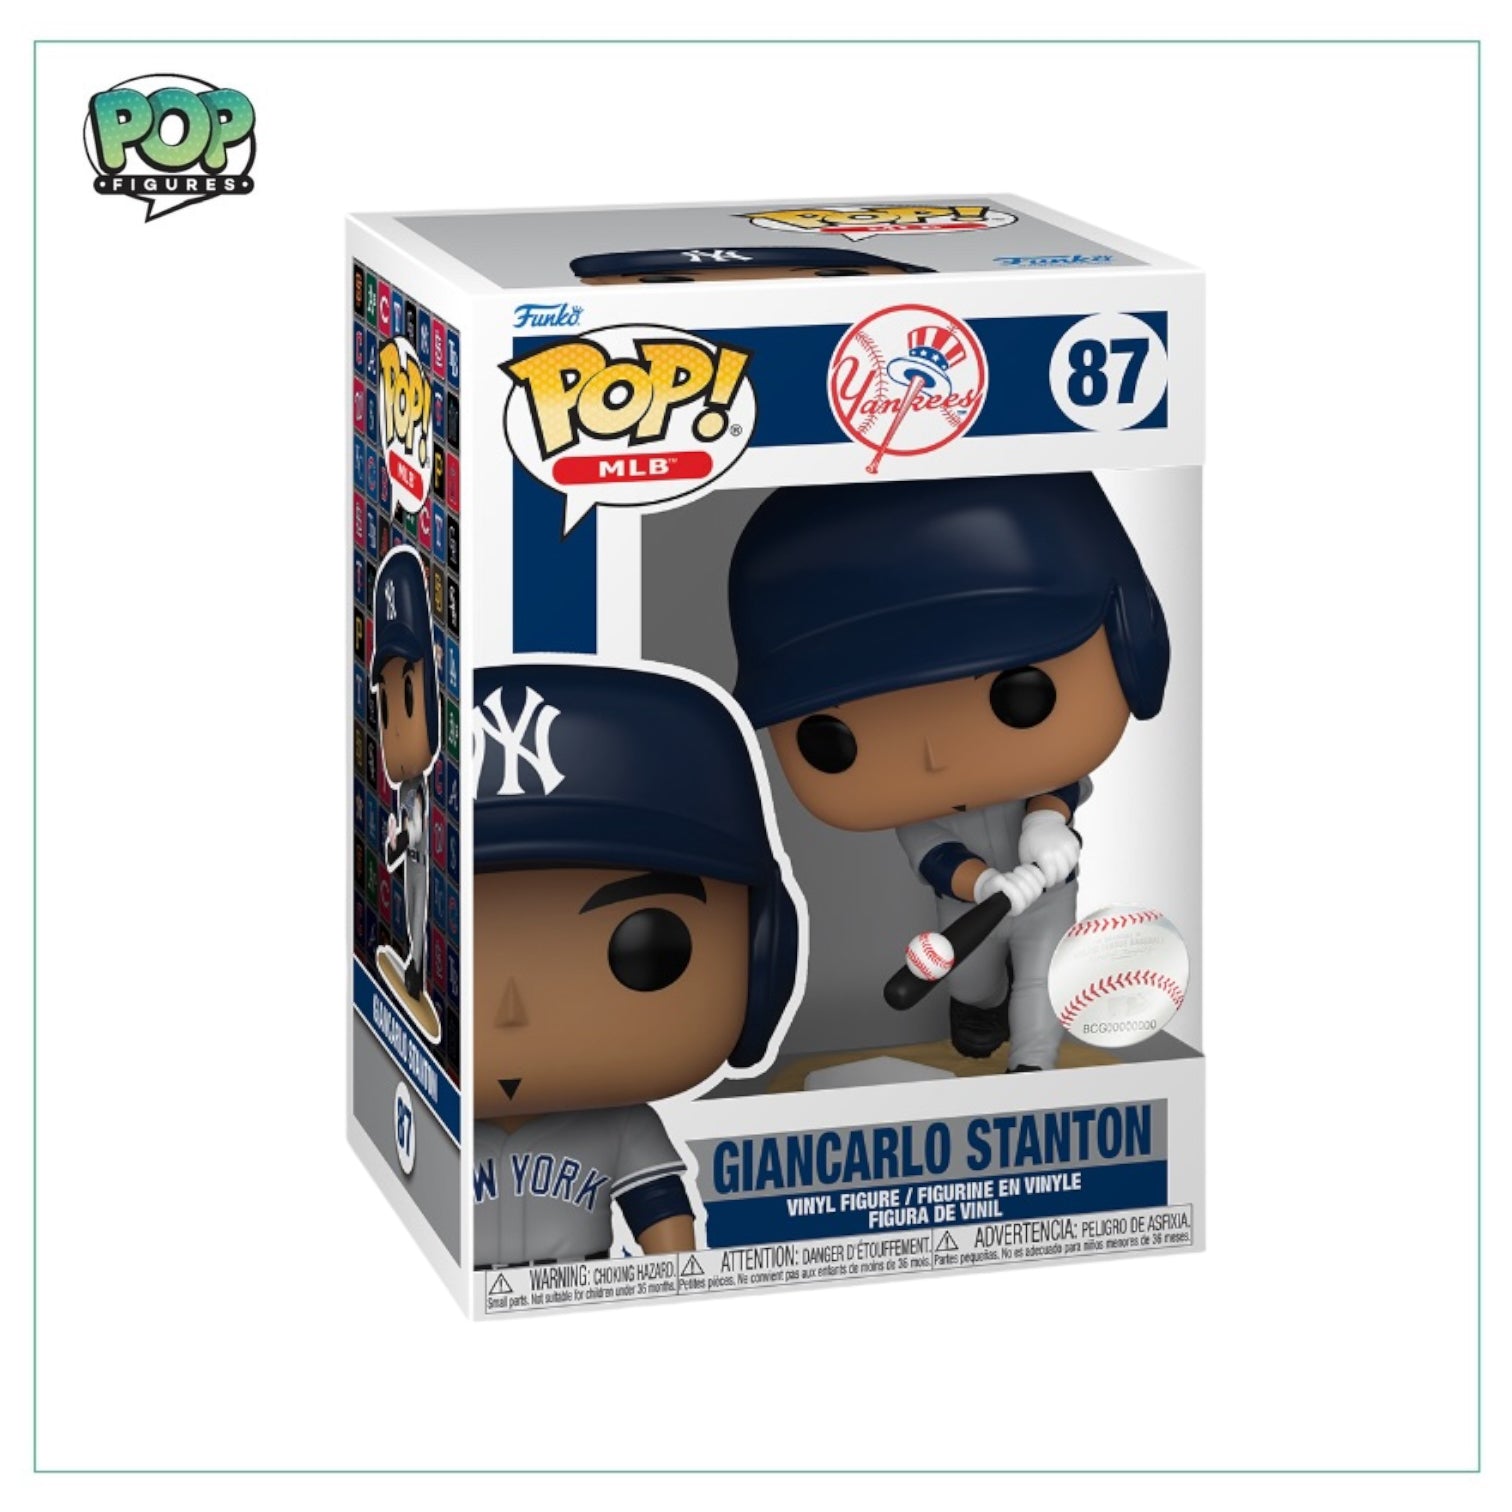 Giancarlo Stanton #87 Funko Pop! - New York Yankees - MLB